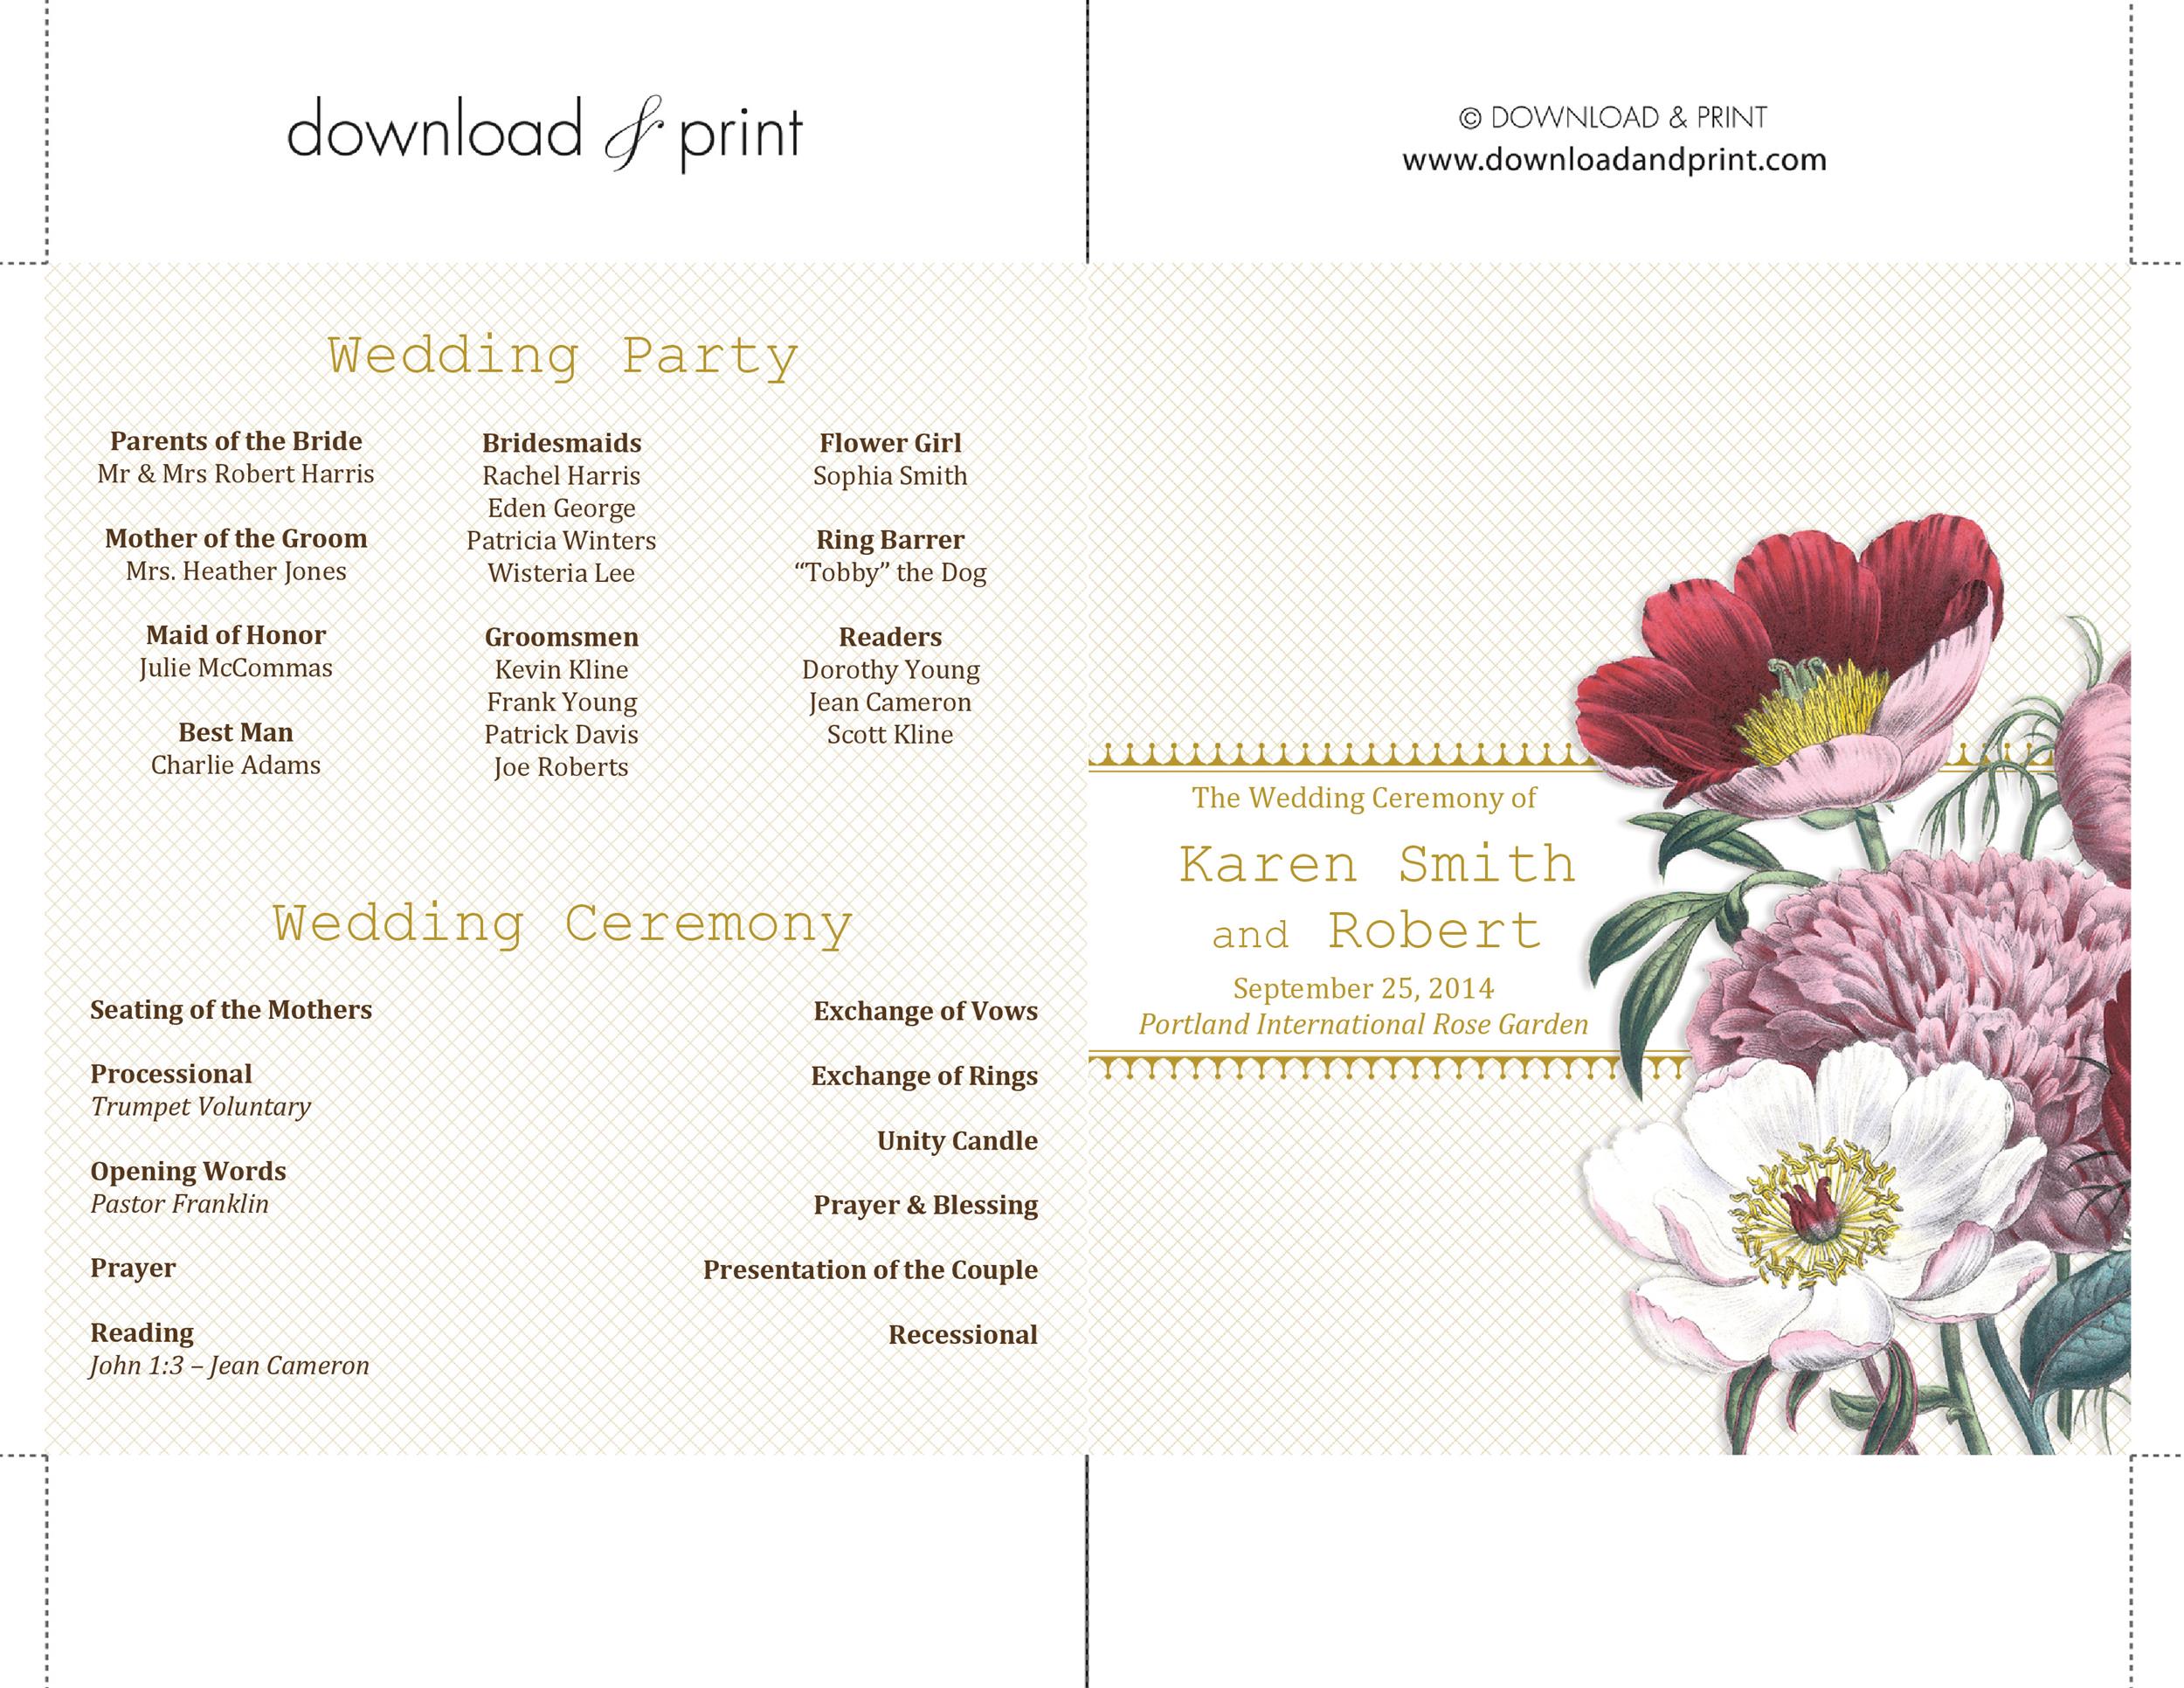 37 Printable Wedding Program Examples & Templates ᐅ Template Lab